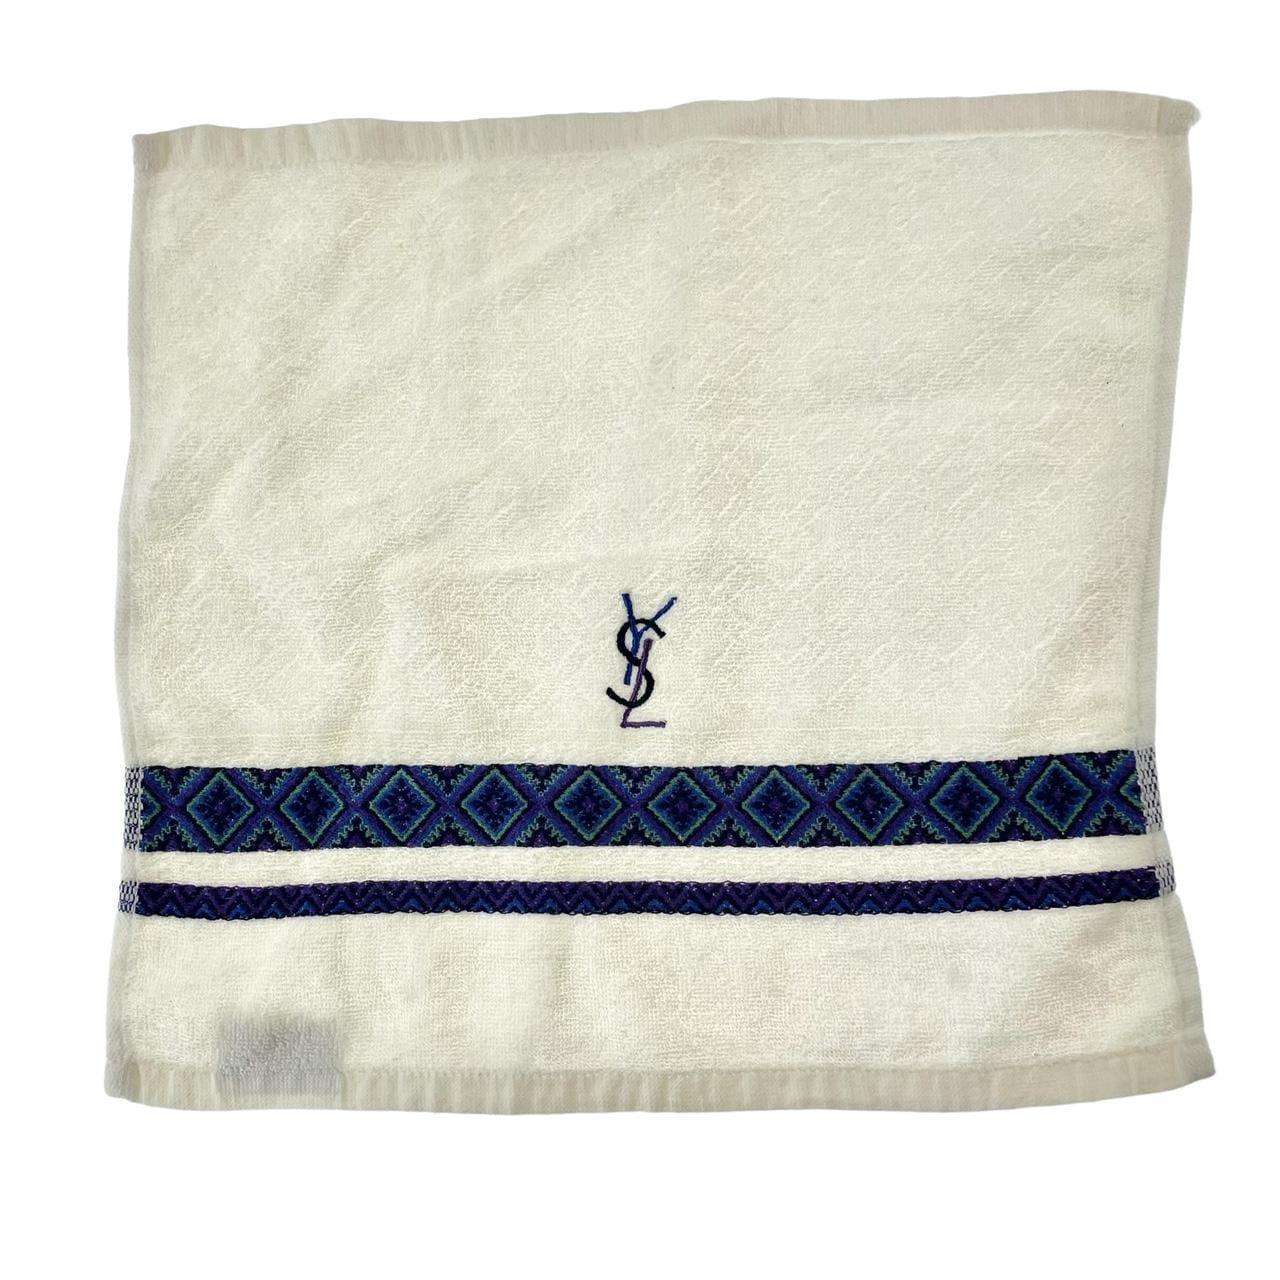 Vintage YSL Yves Saint Laurent hand towel - Known Source